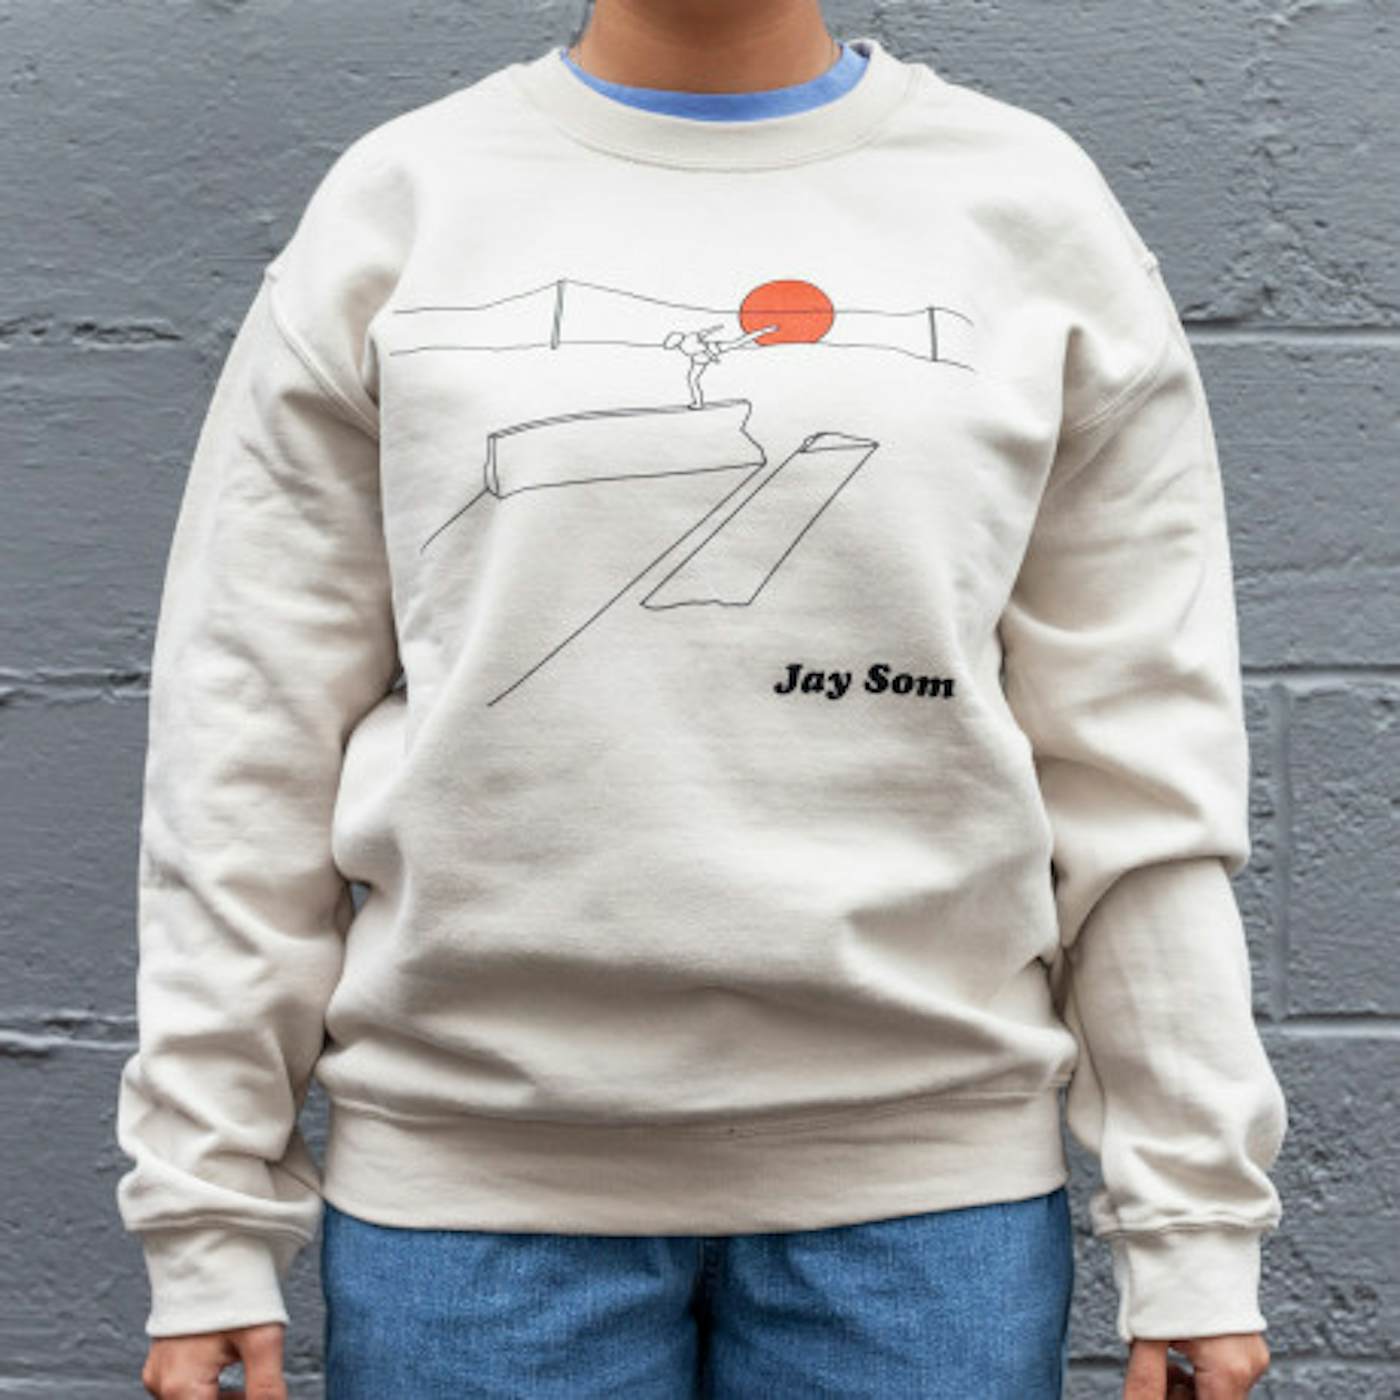 Jay Som Balance Crew Neck Sweatshirt Crew Neck Sweatshirt (Large)